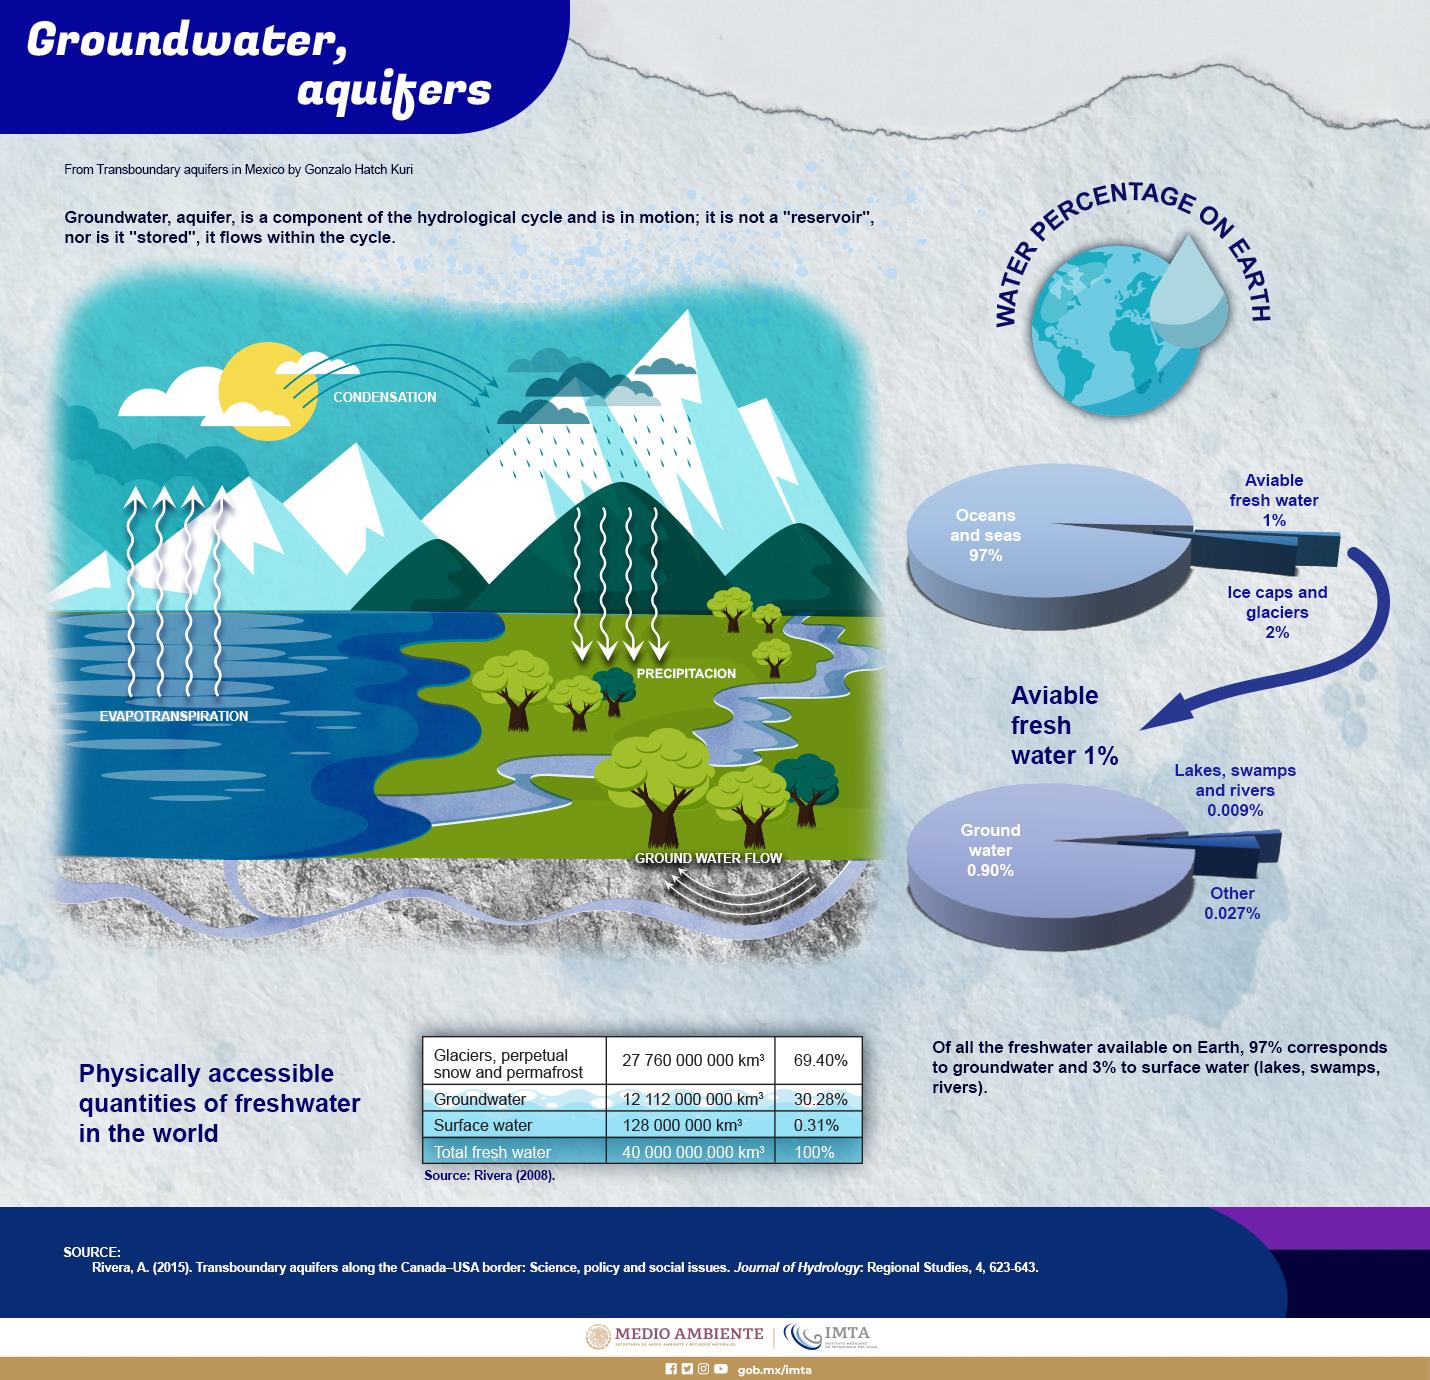 Groundwater, aquifers